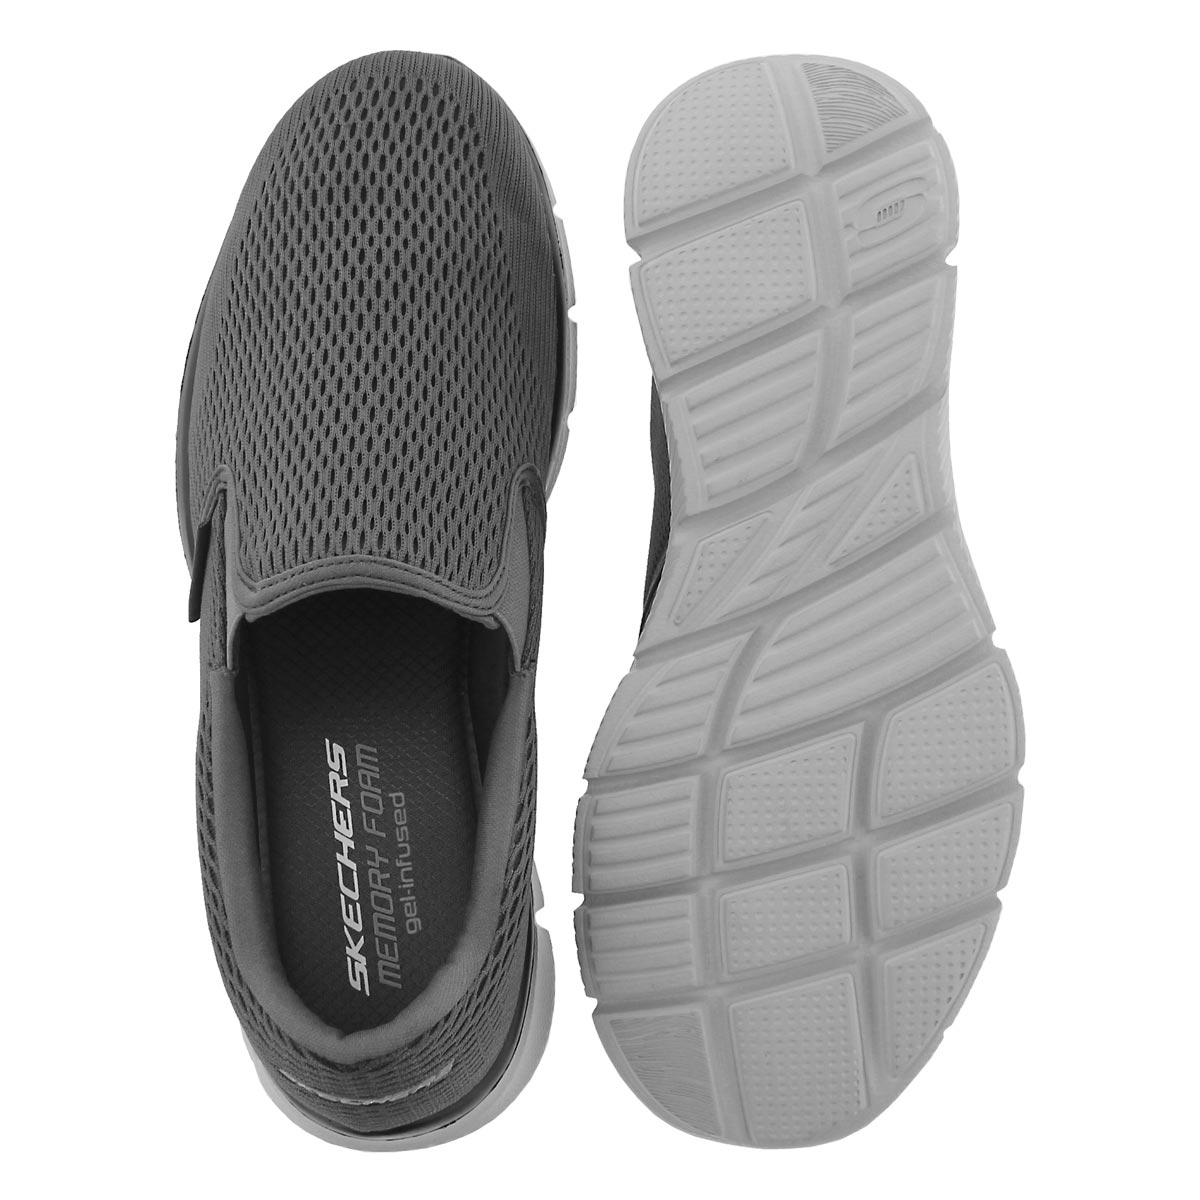 Skechers Men's Equalizer- Double Play Slip On Shoe | eBay